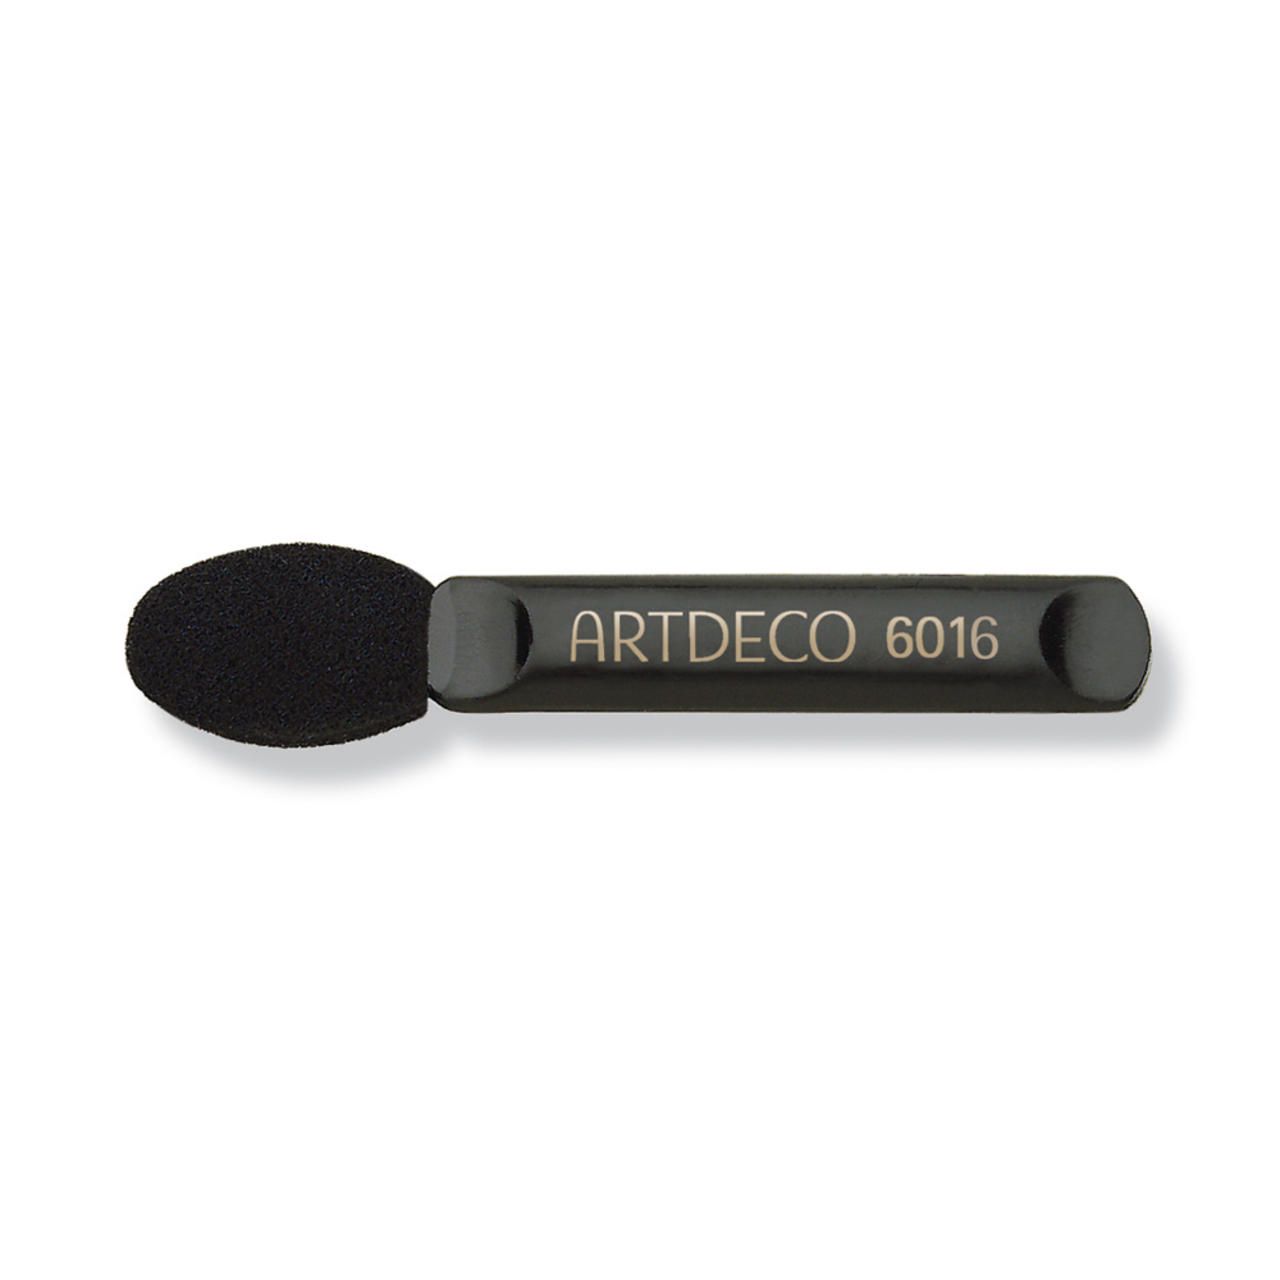 Artdeco, Rubicell-Applikator